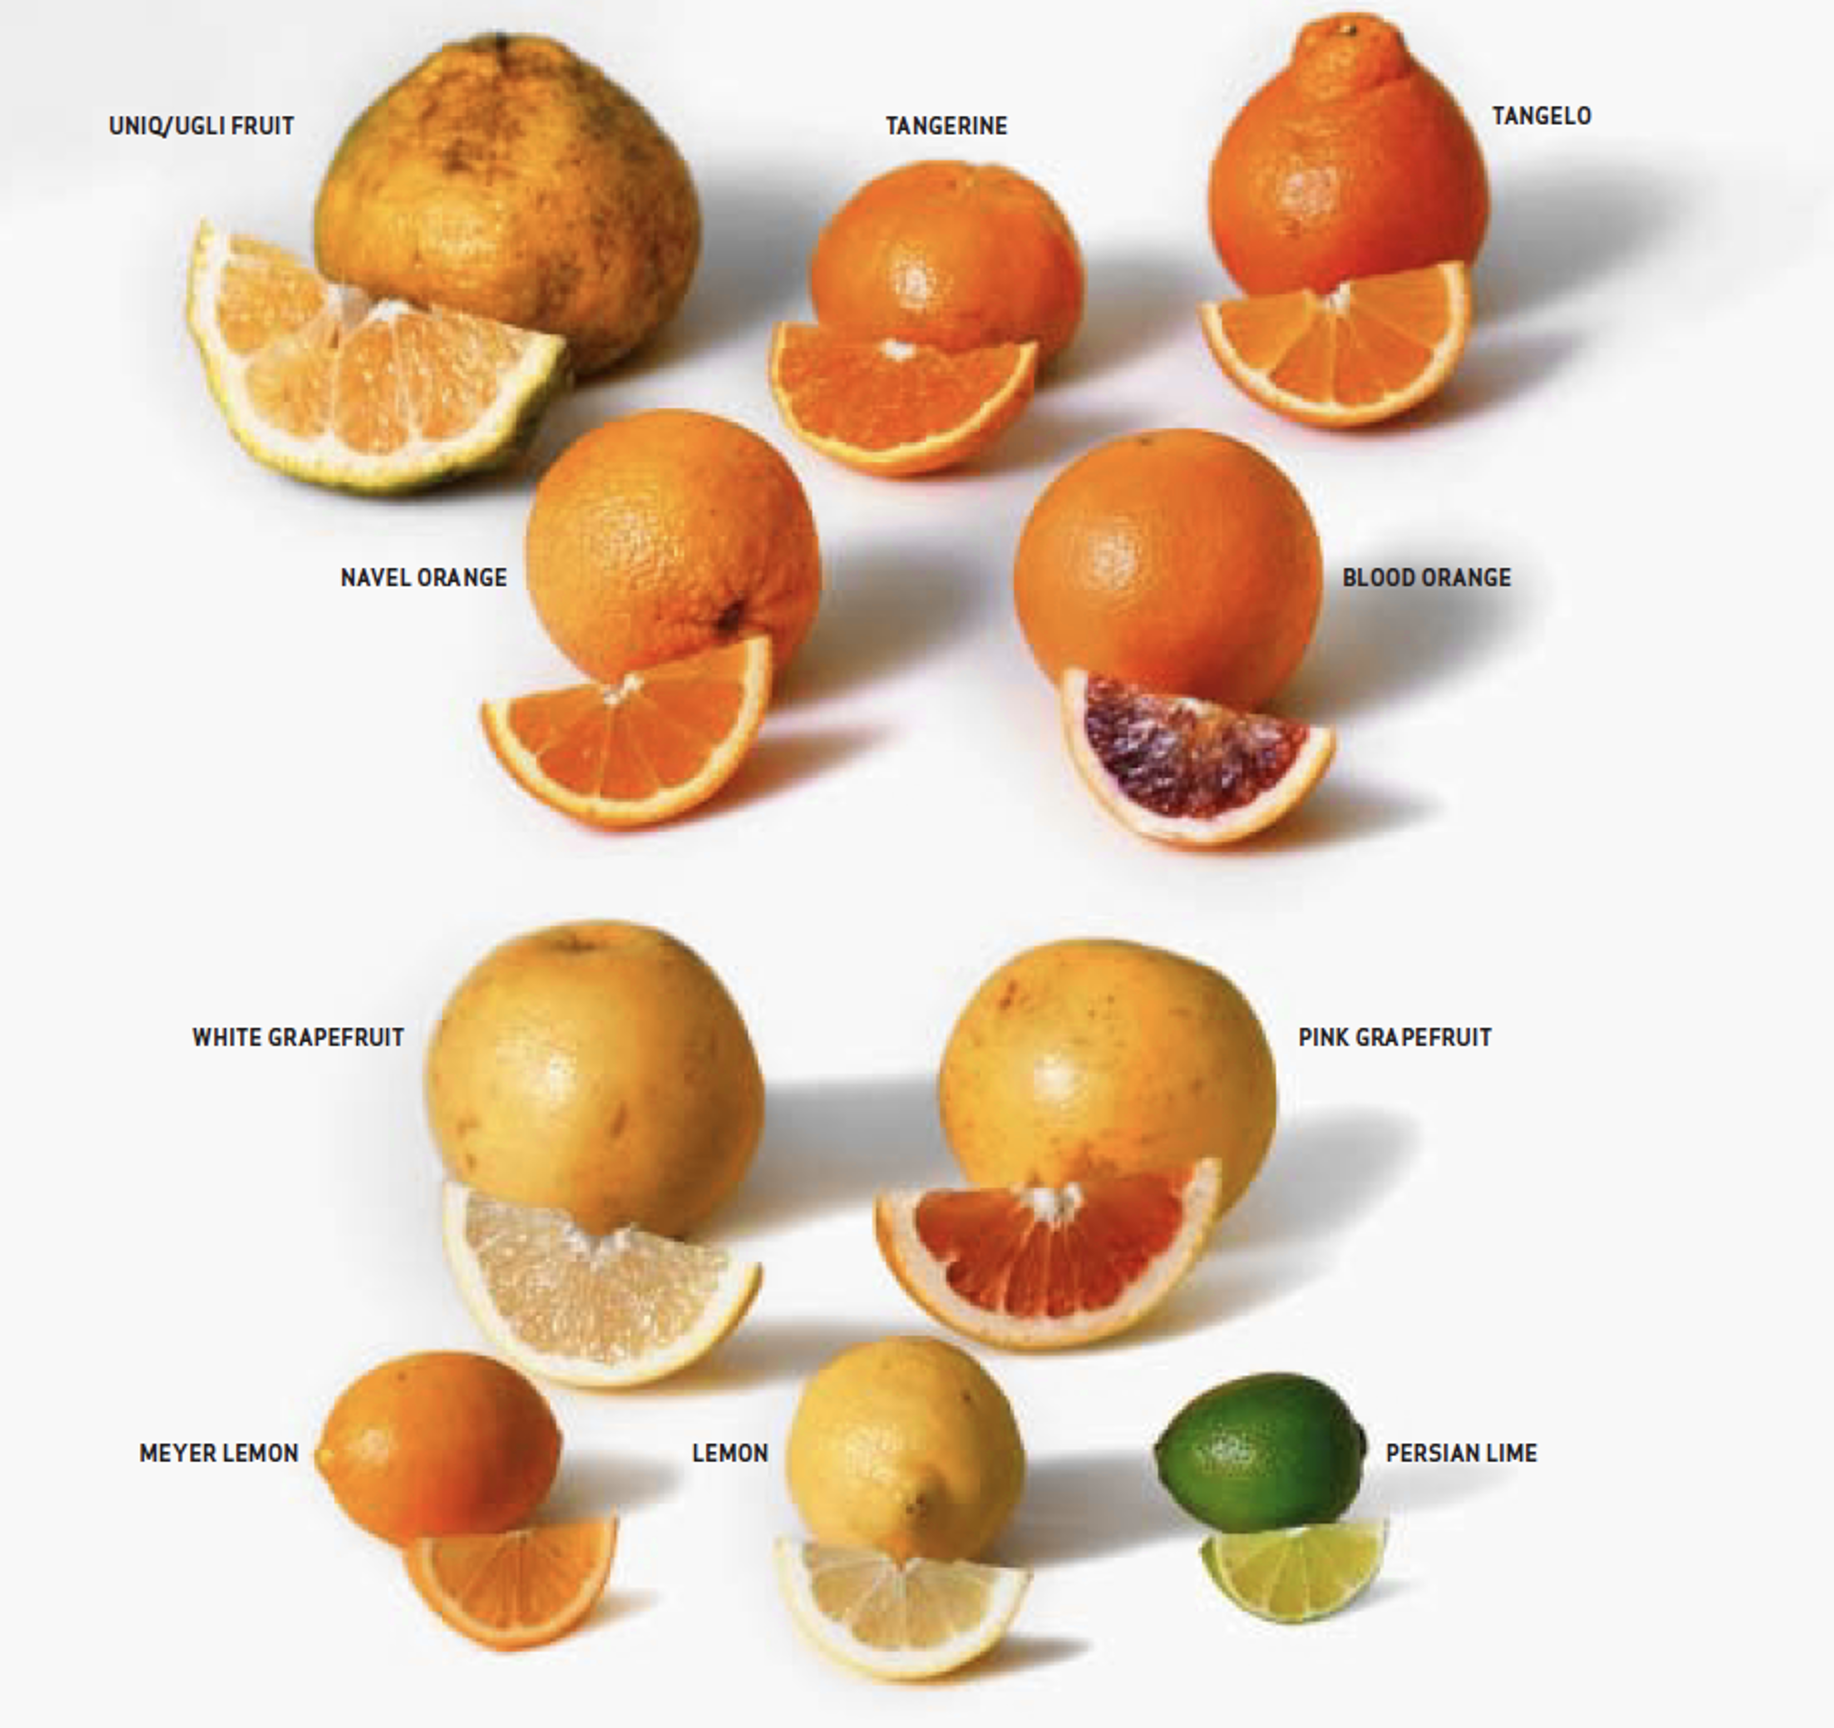 Citrus fruit varieties